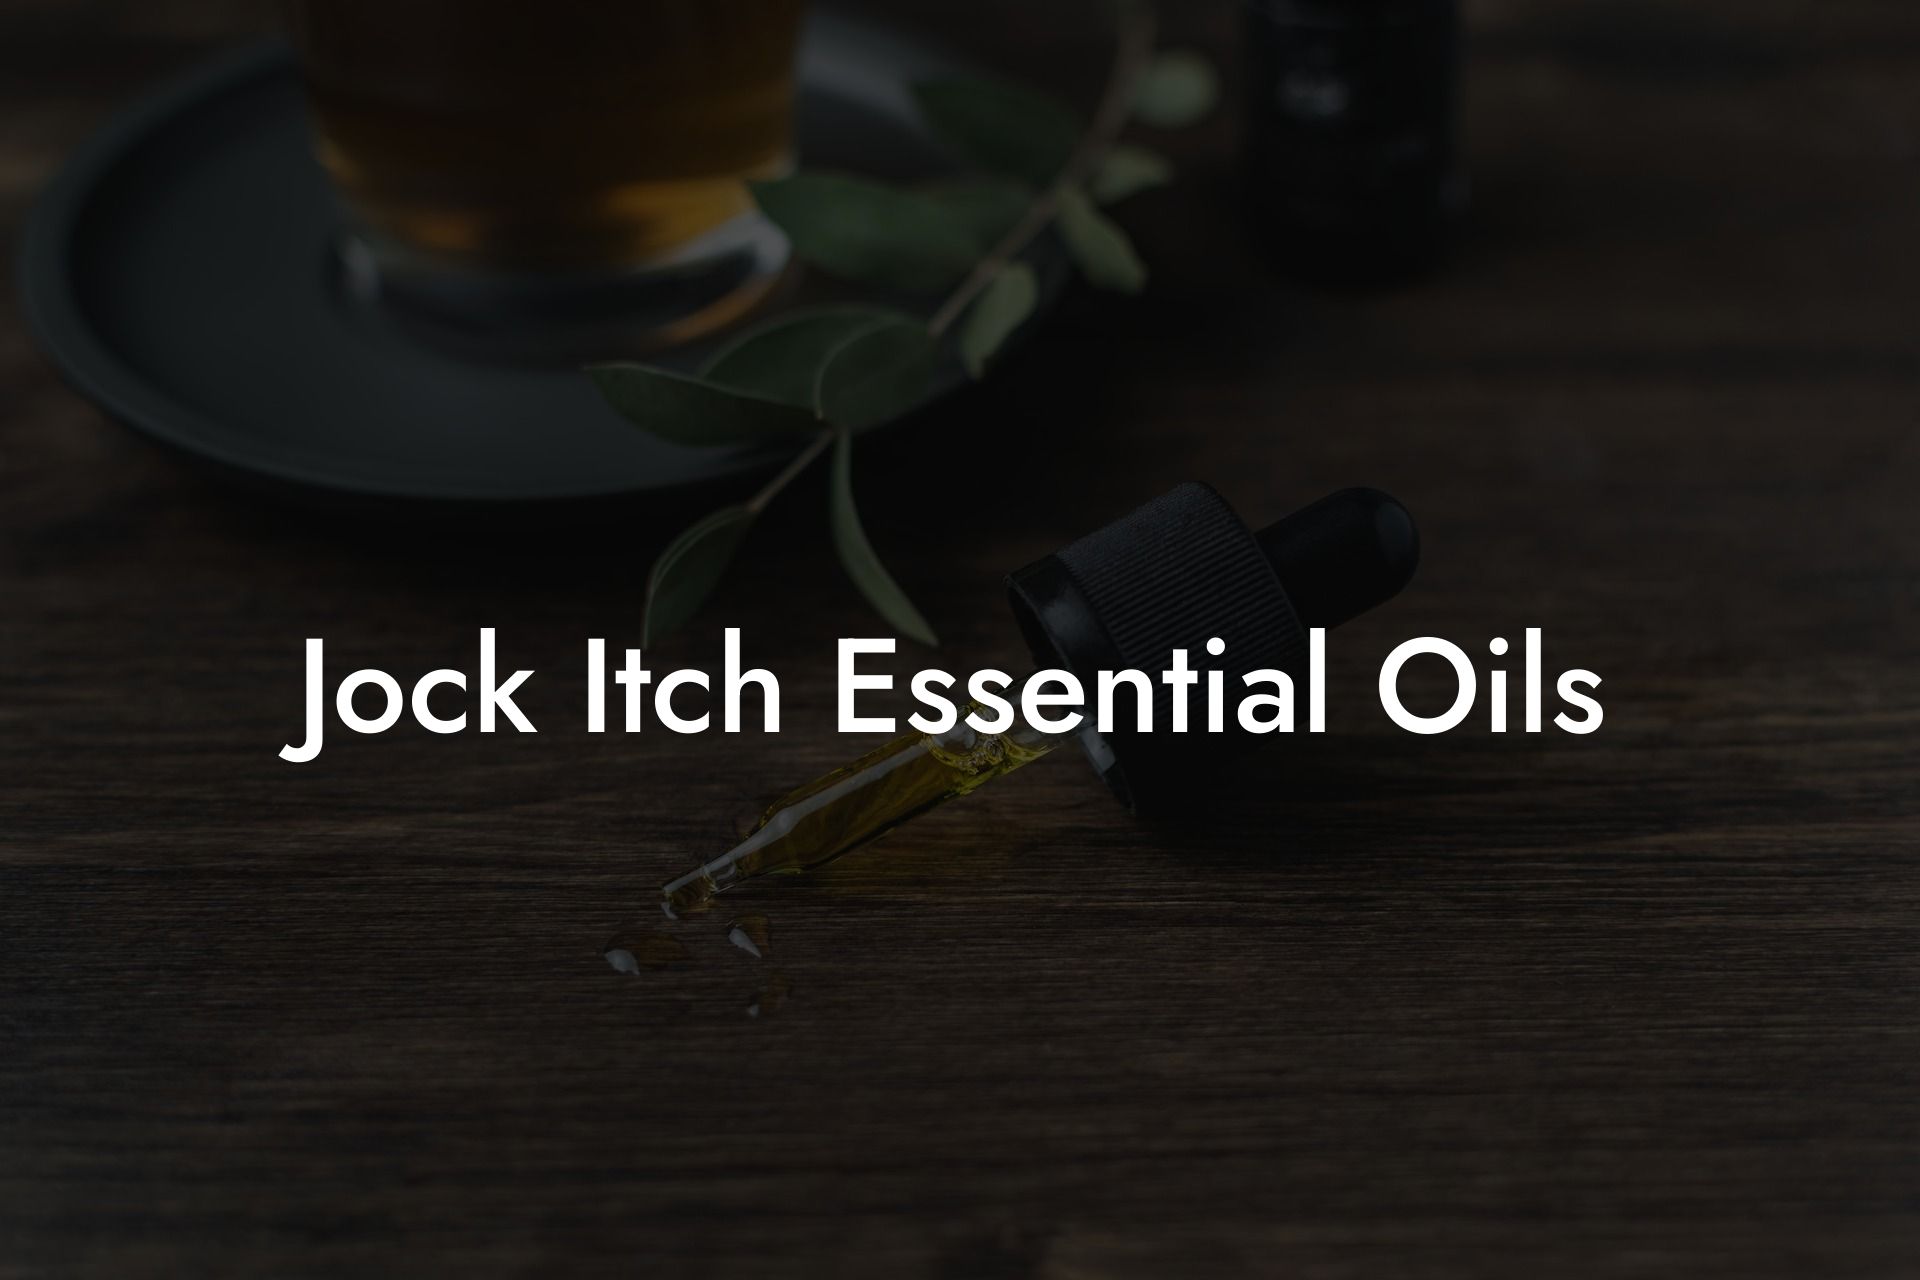 Jock Itch Essential Oils